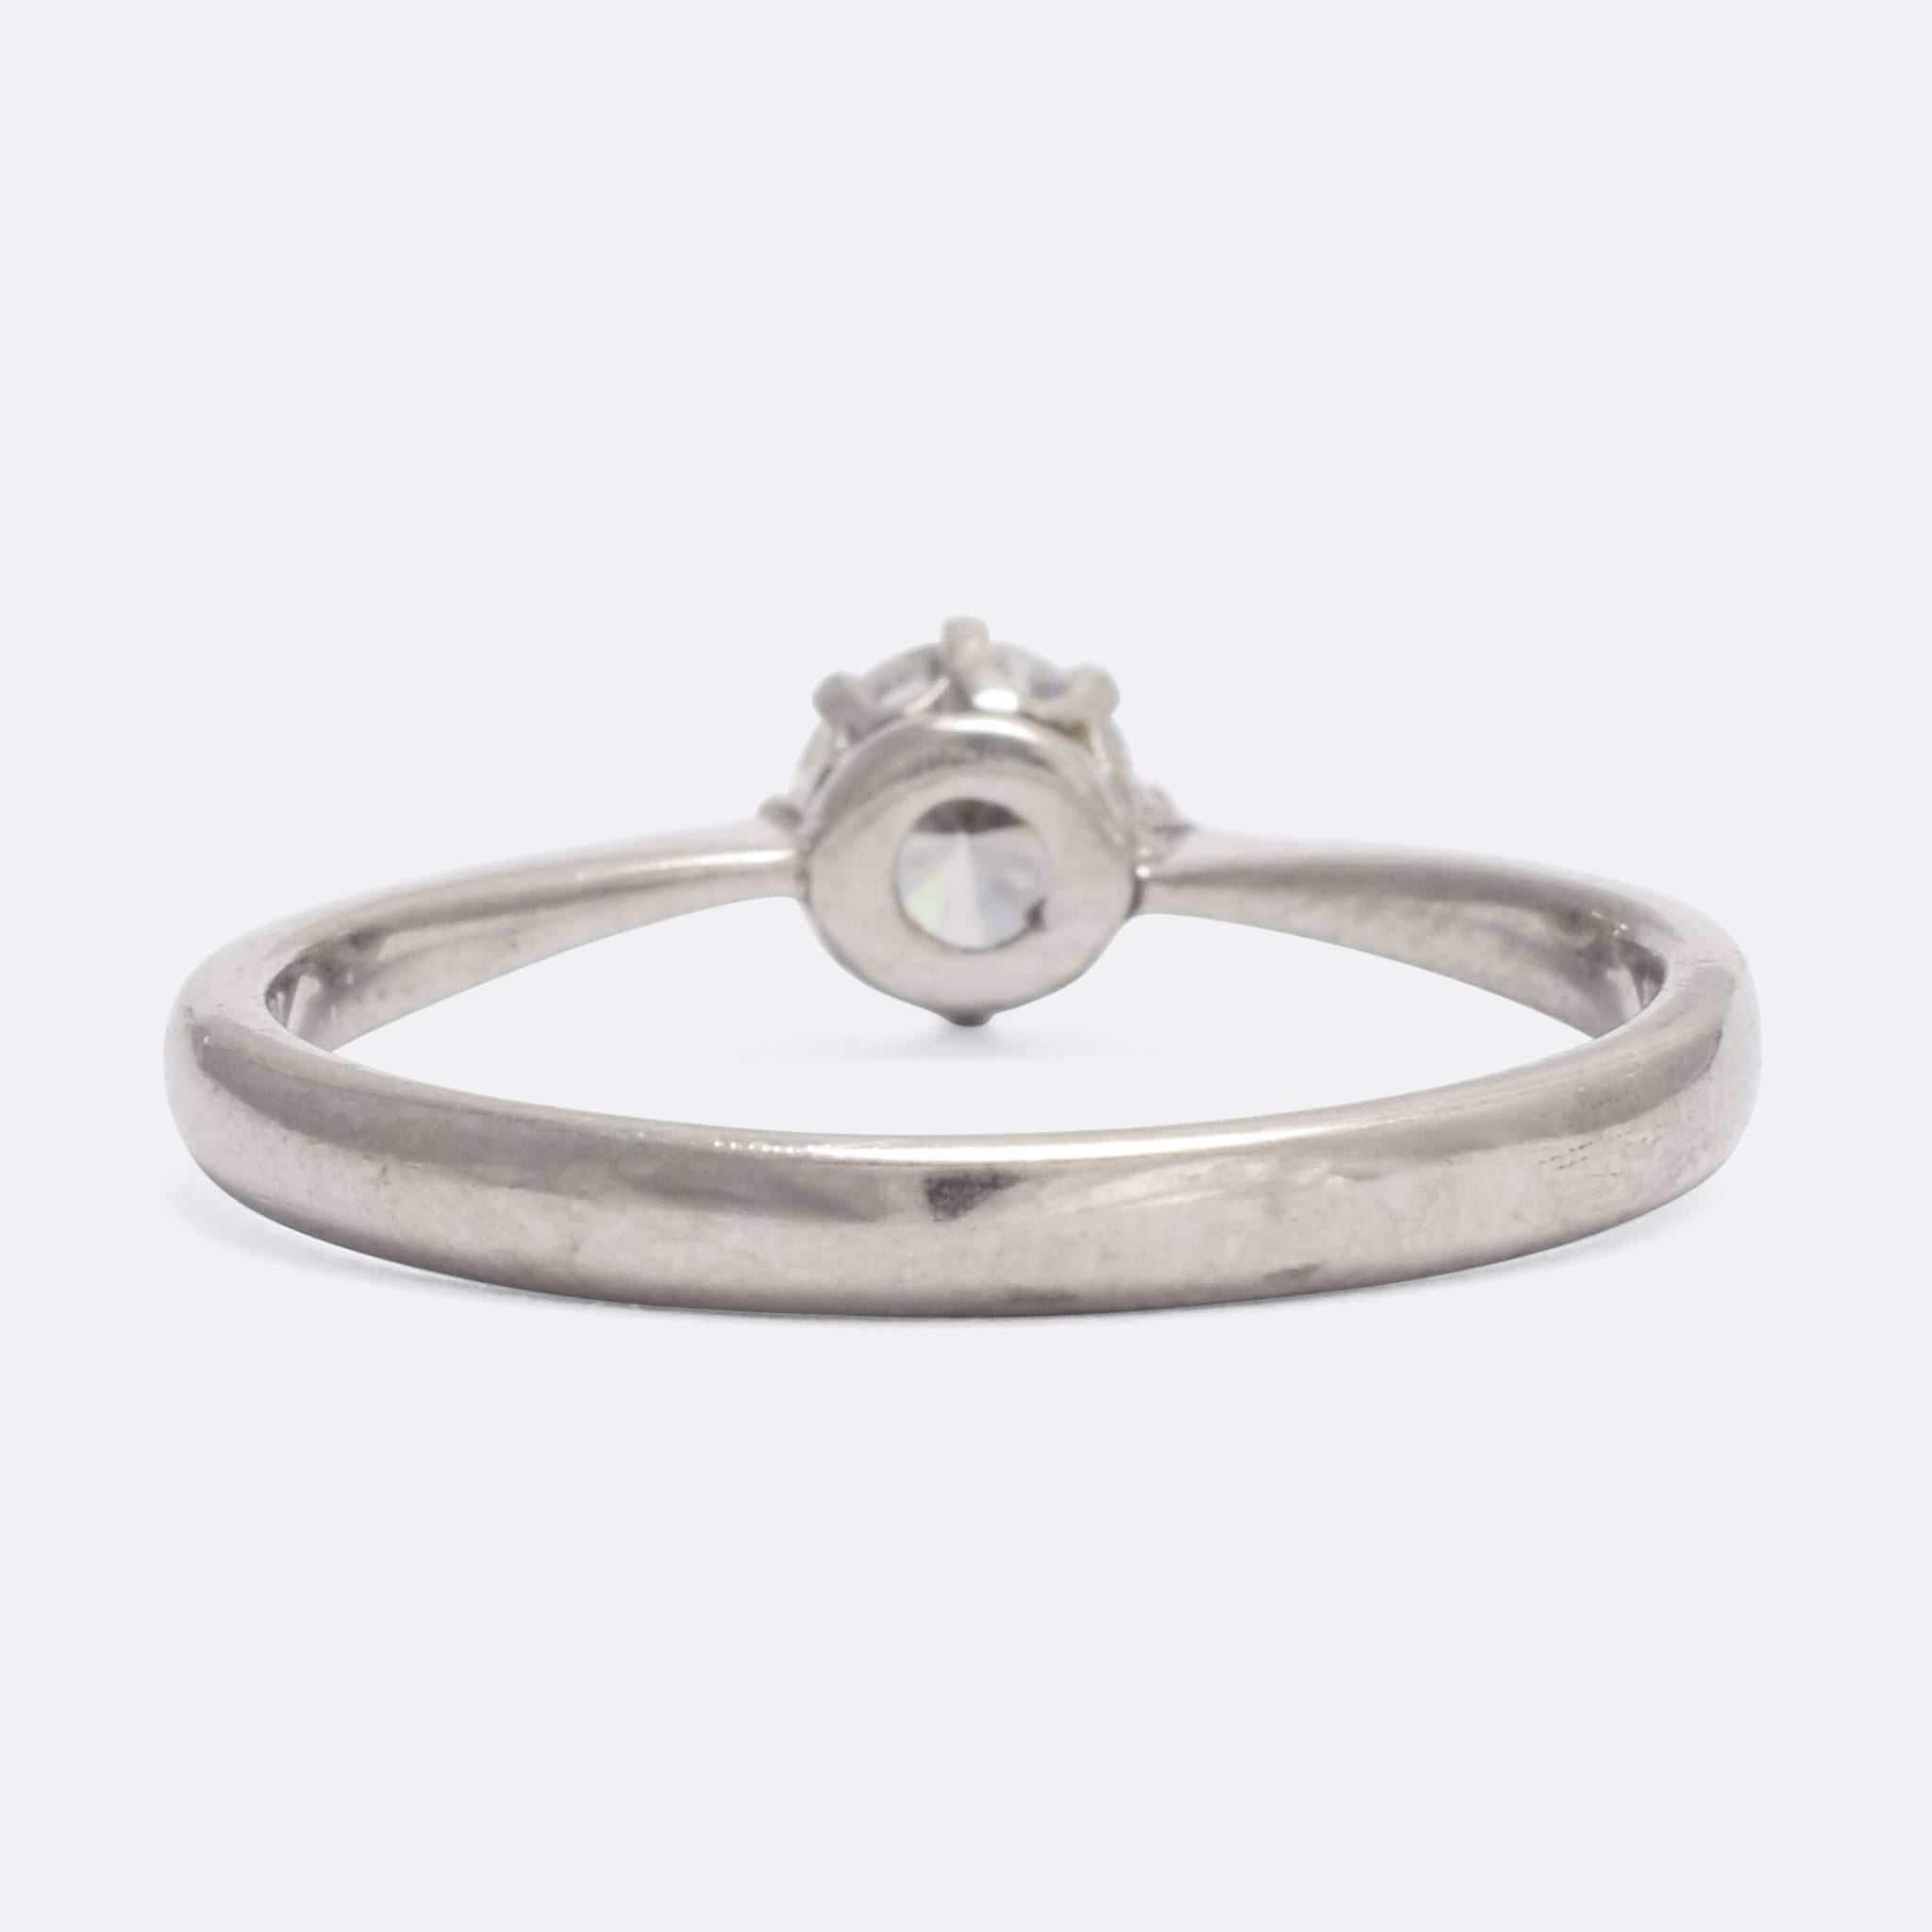 Art Deco 1920s Transitional Cut Diamond Solitaire Ring